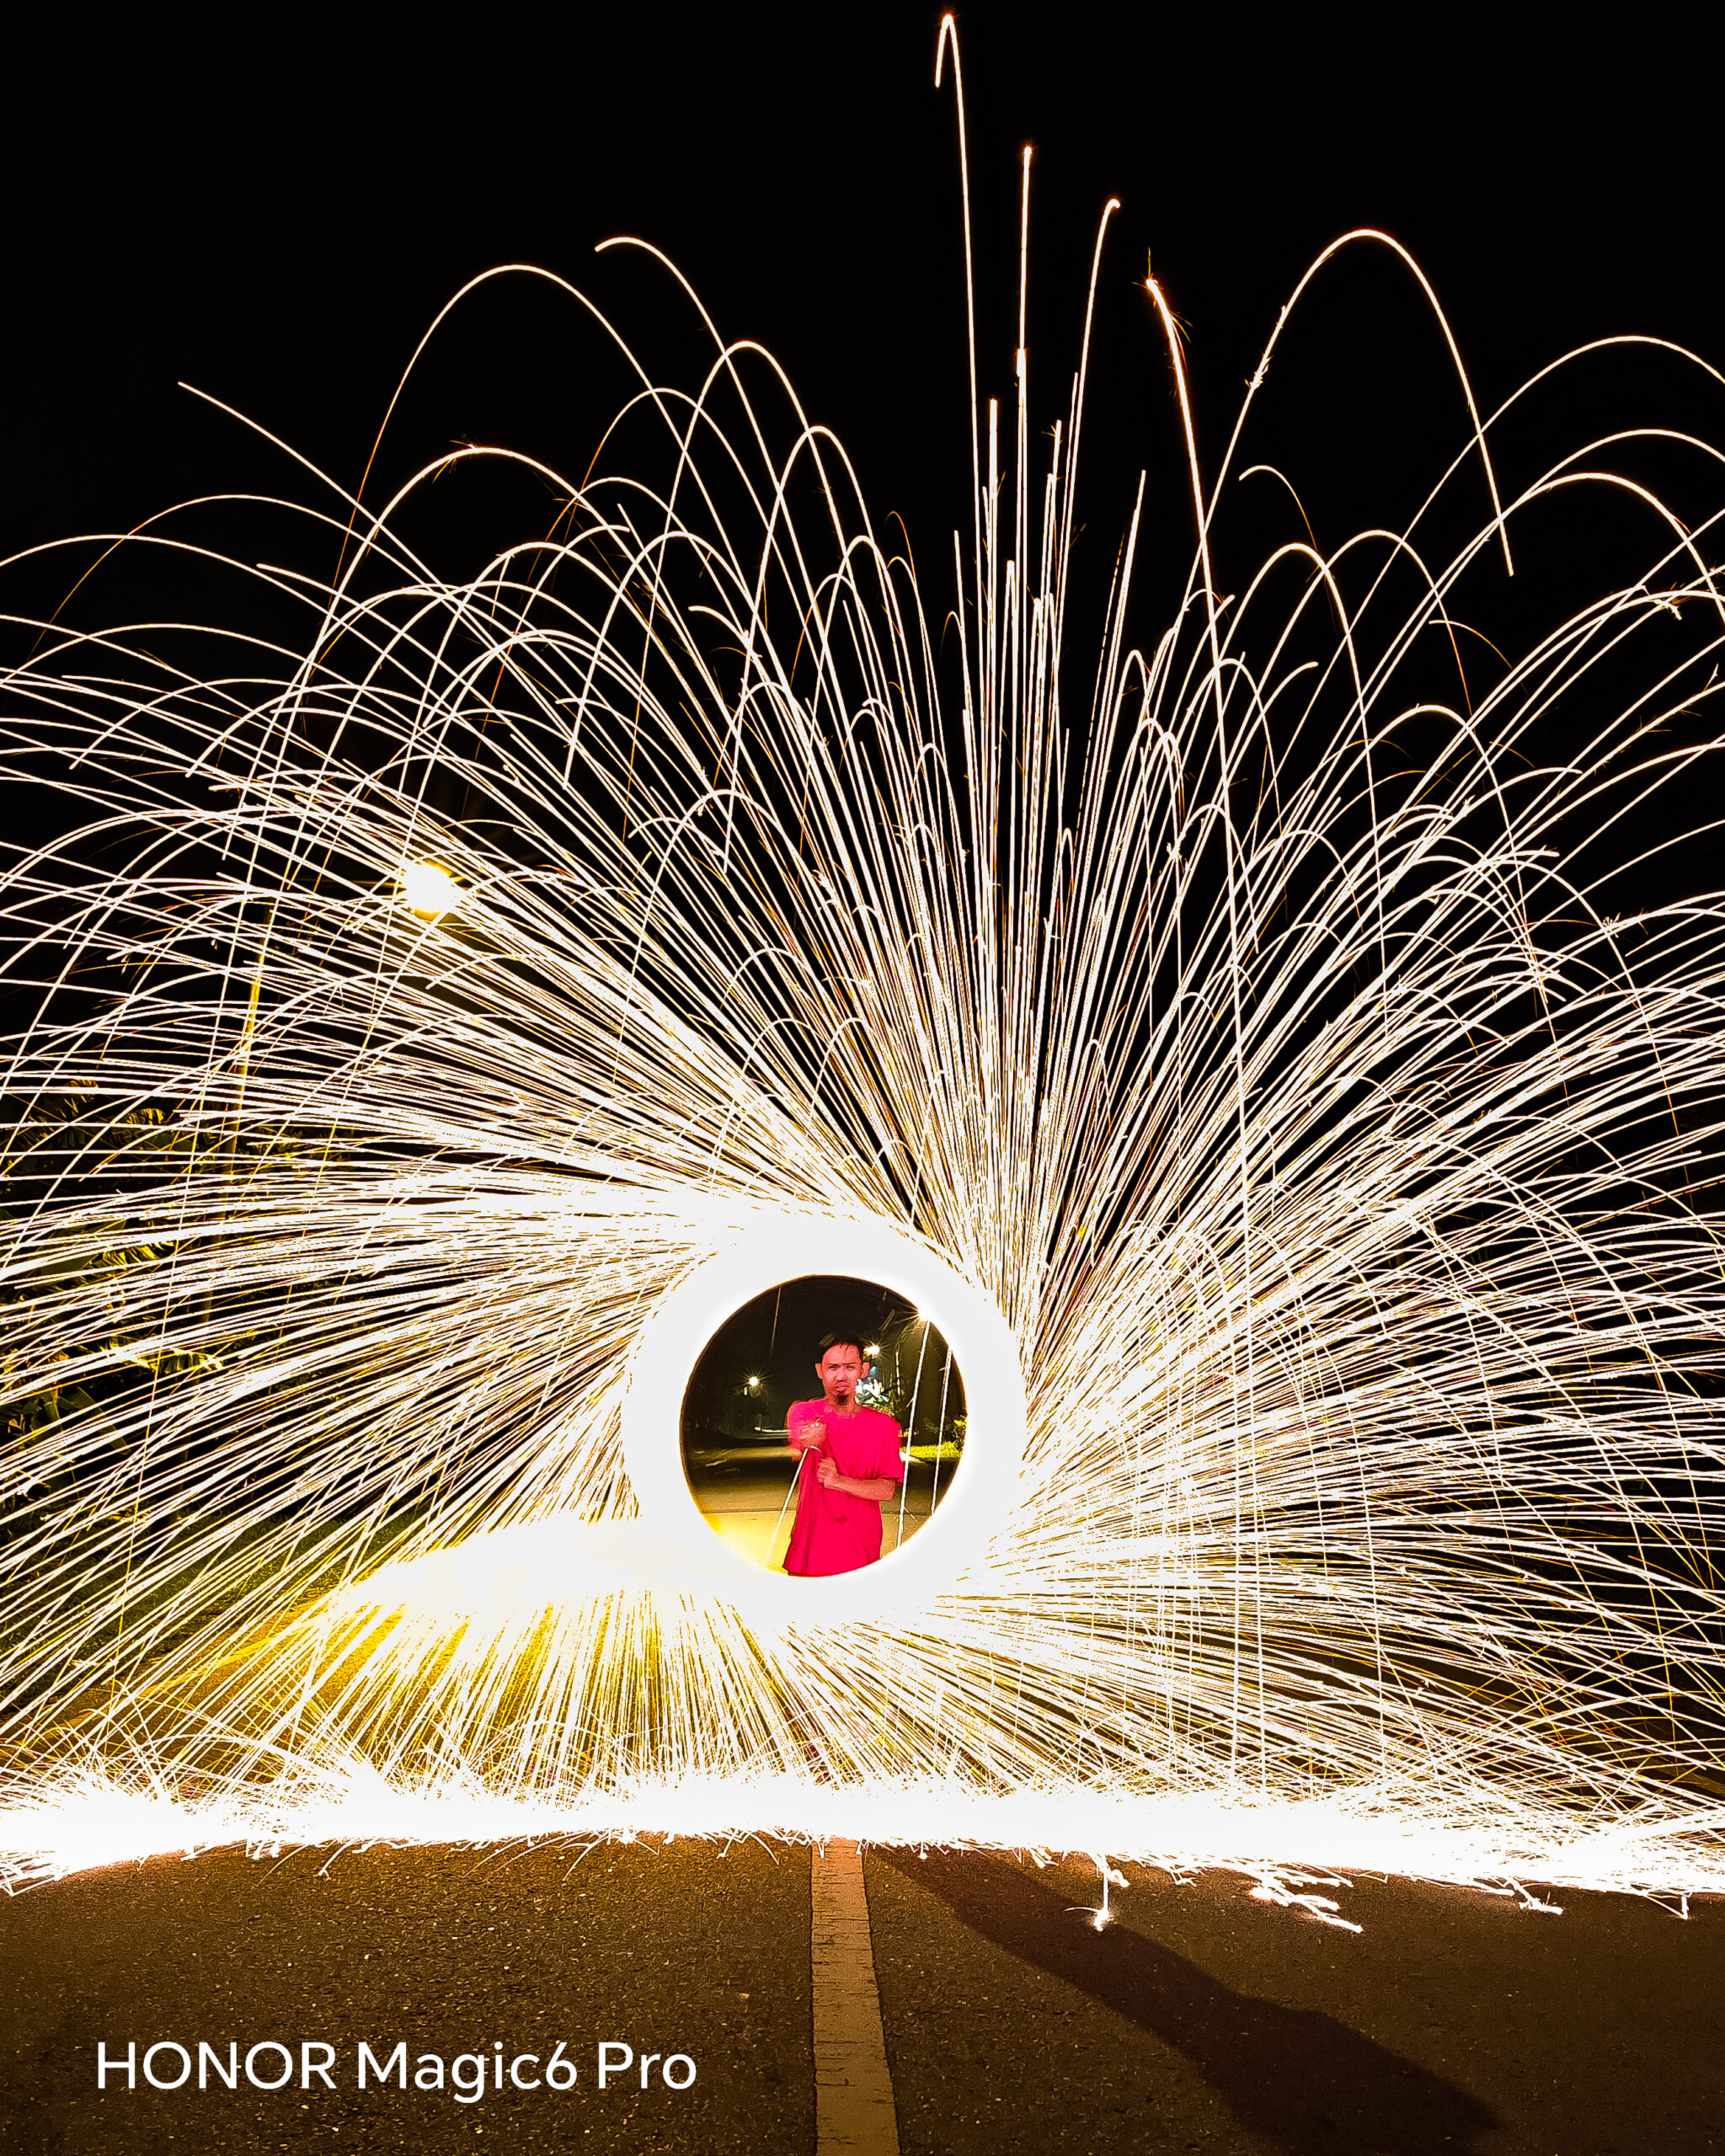 Spiralled firework by fahmie izwan